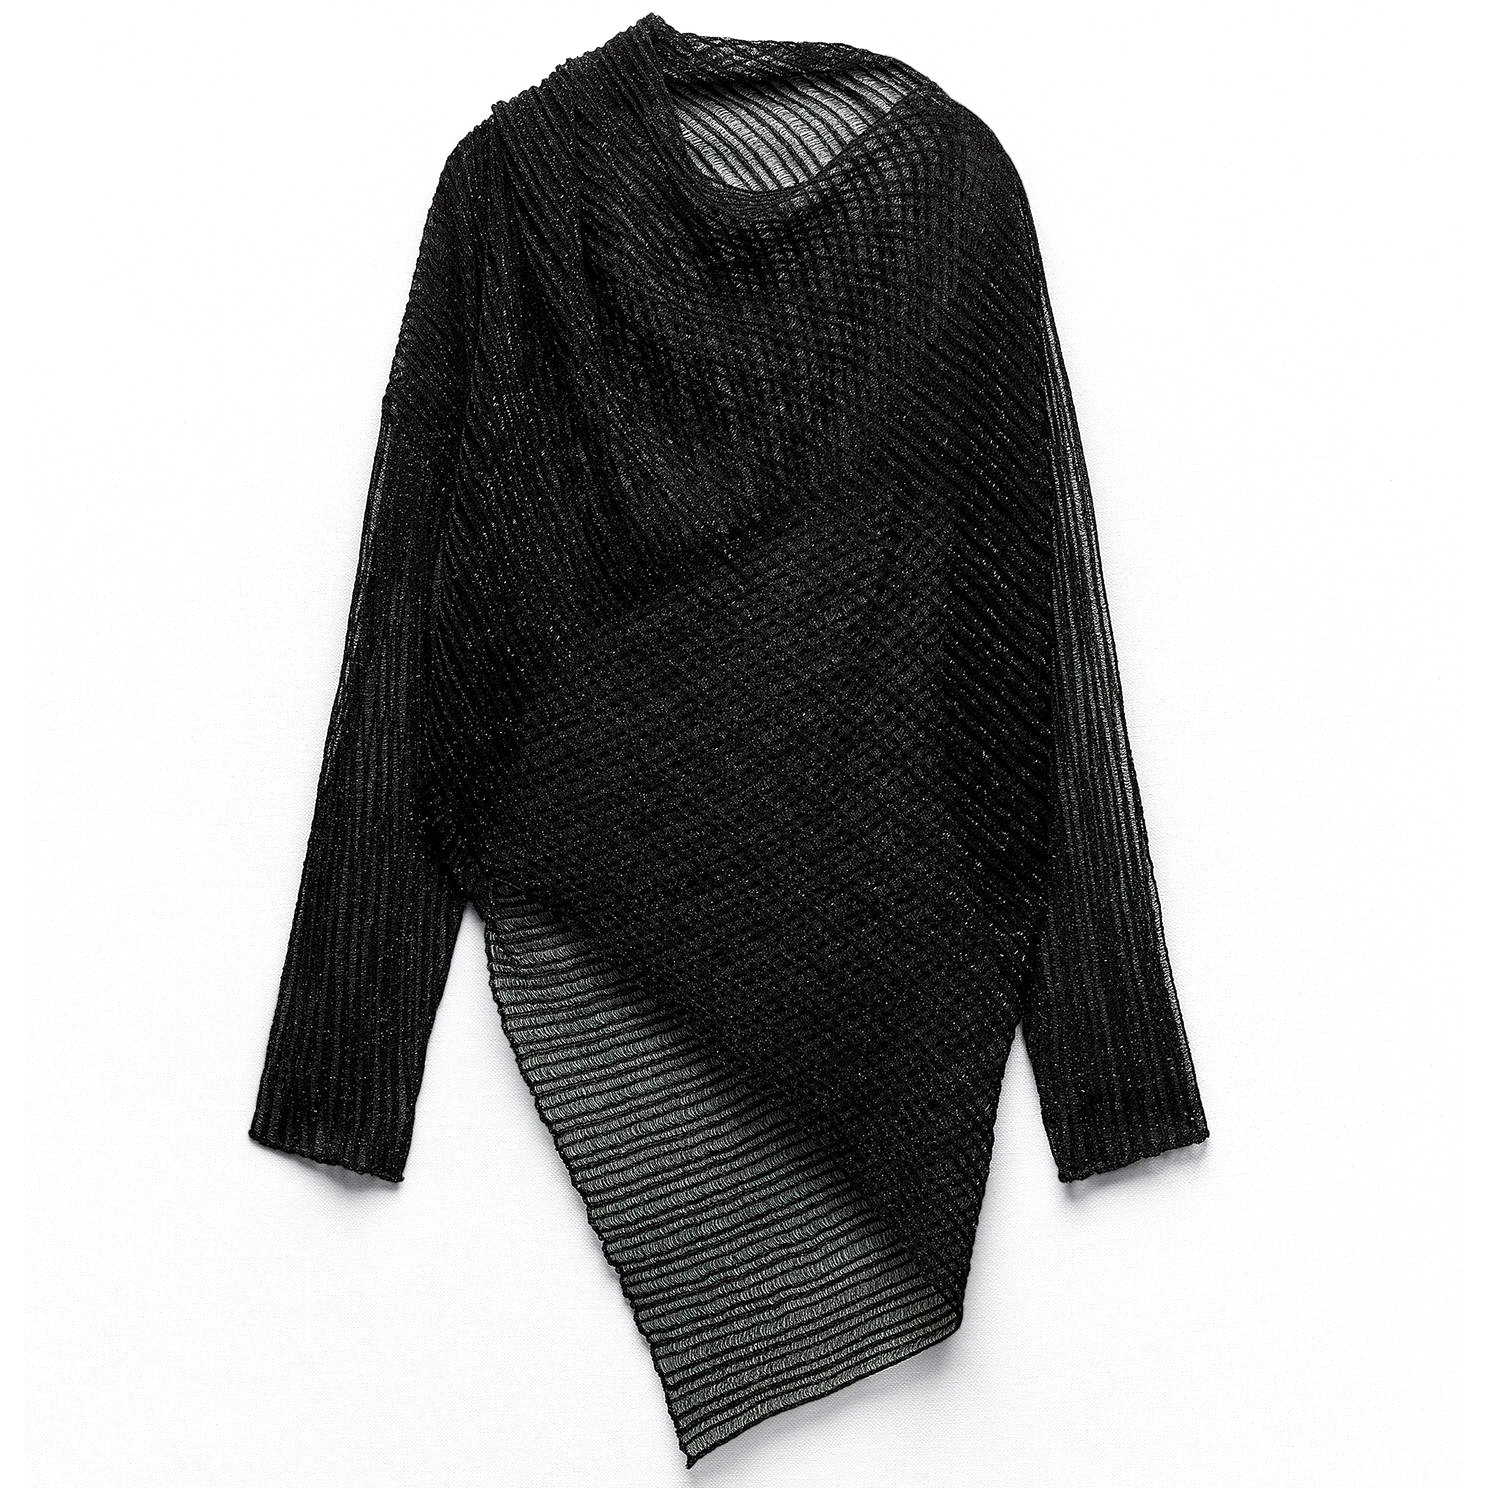 Топ Zara Asymmetric Knit, черный топ zara knit jacquard asymmetric бежевый